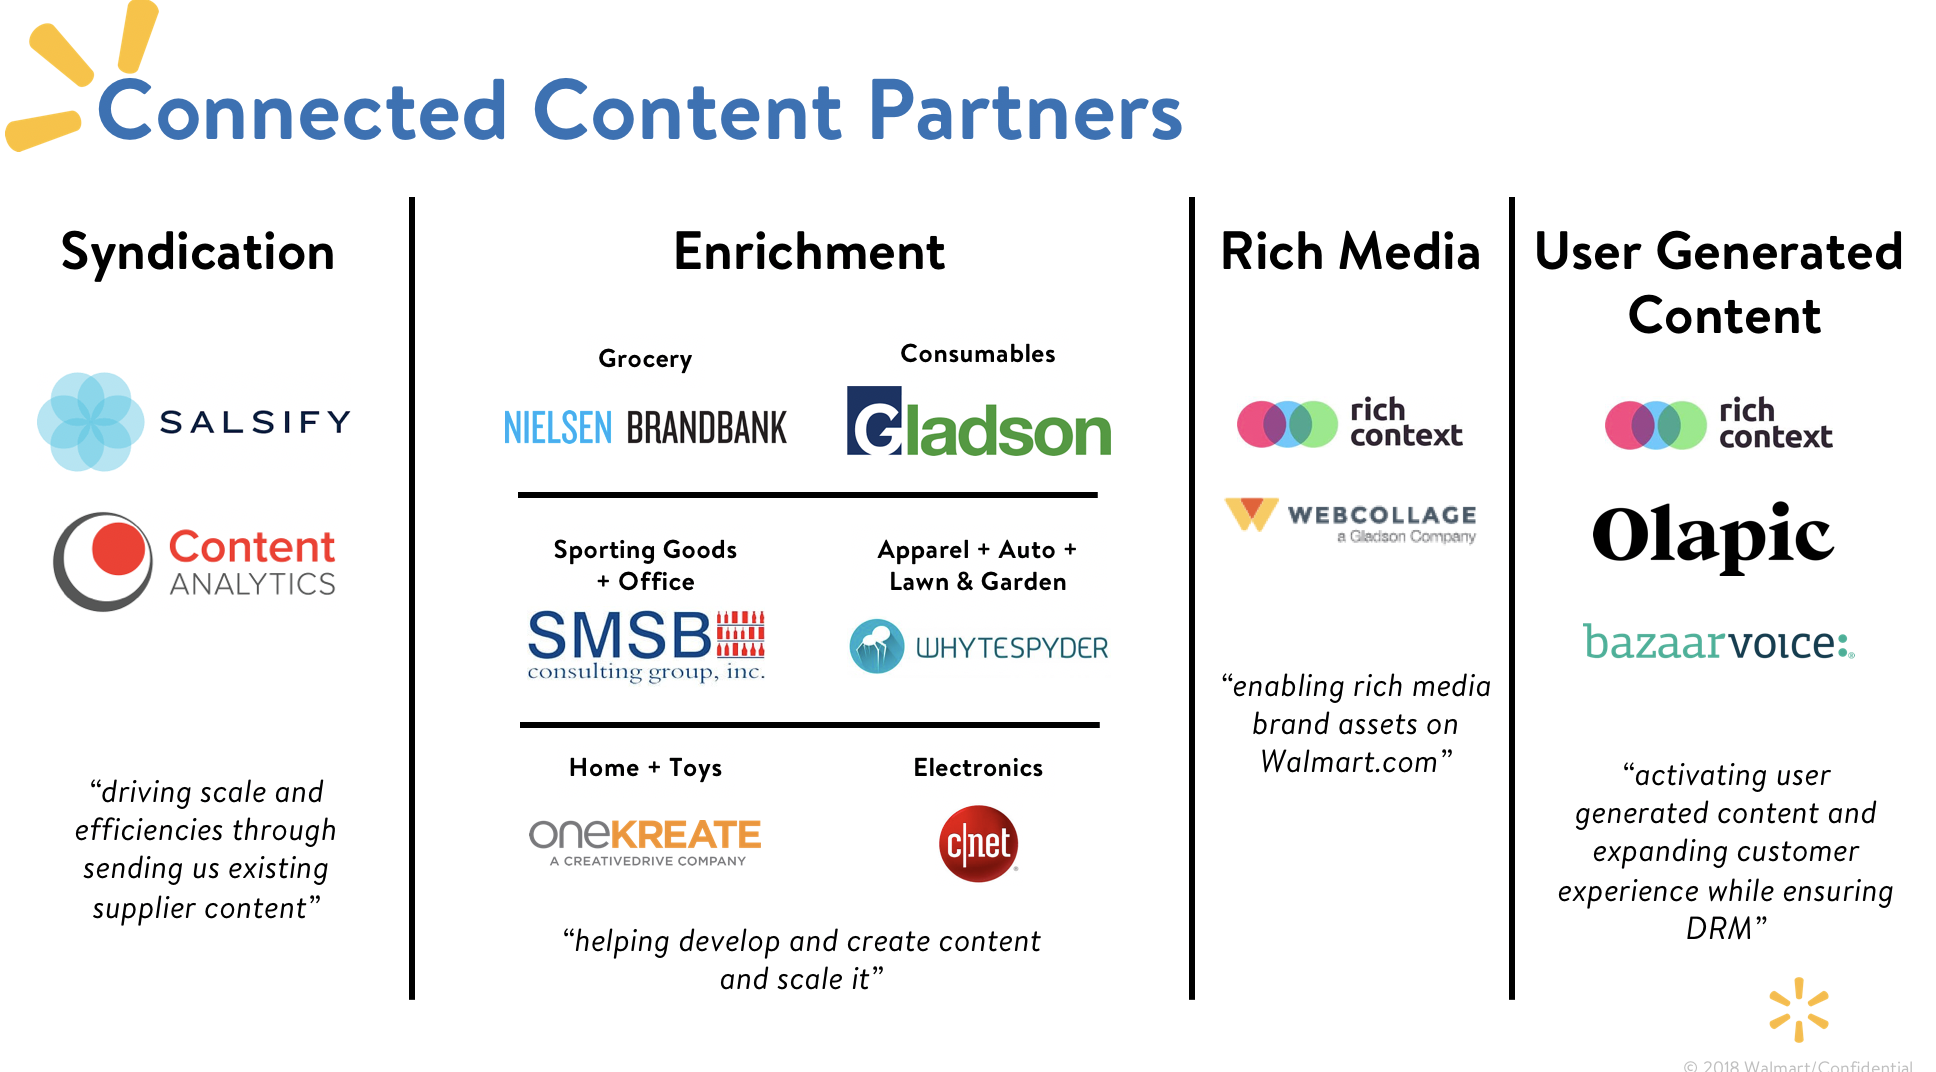 Walmart's Connected Content Partners